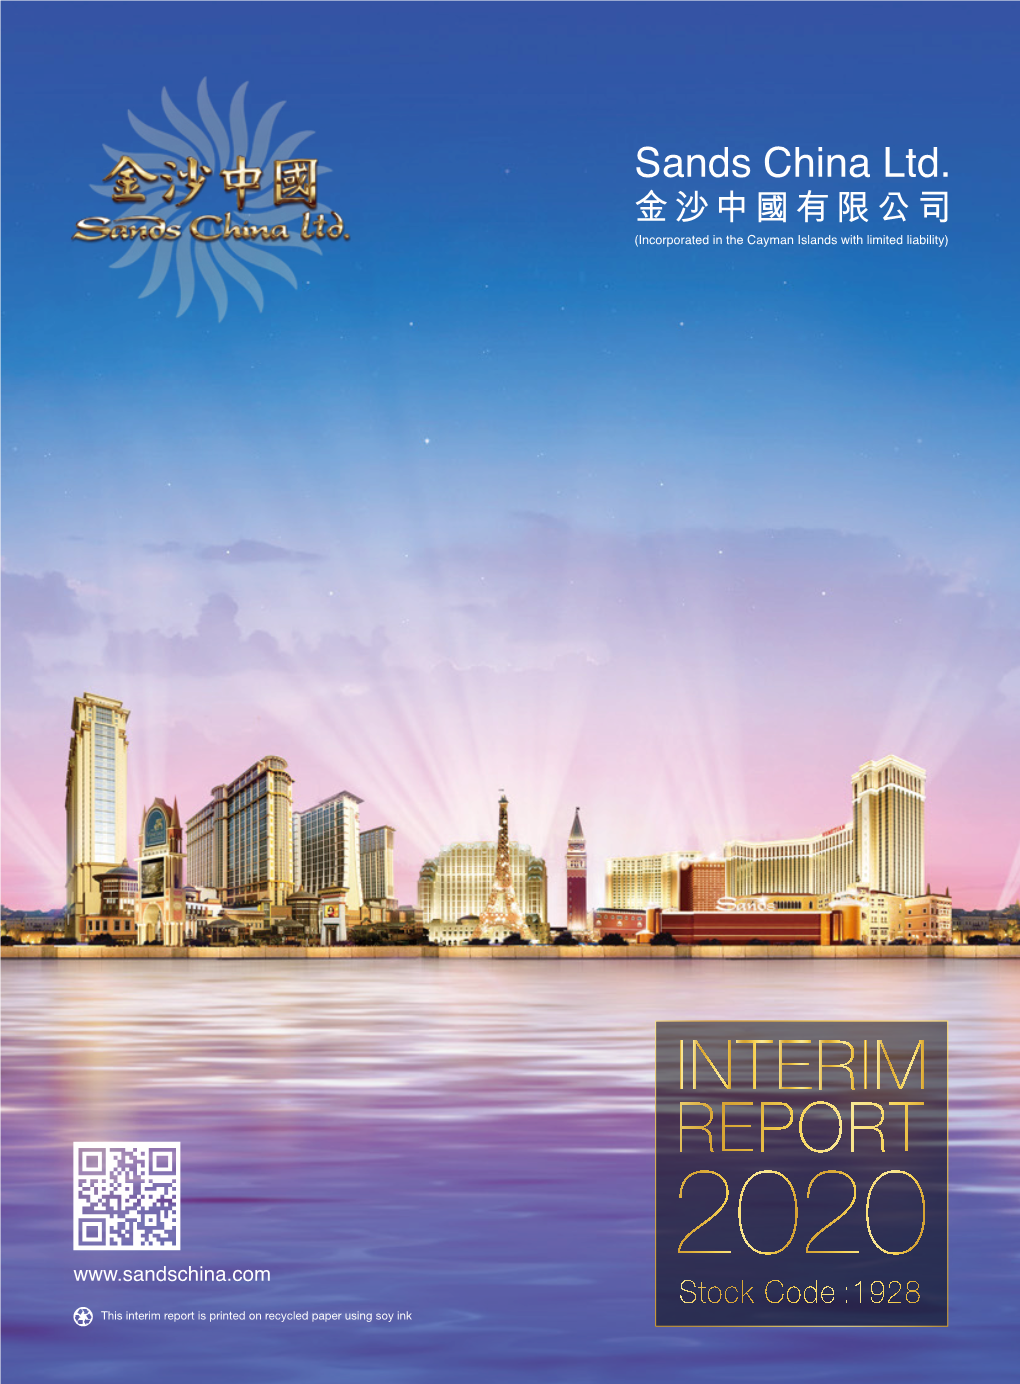 Sands China 2020 Interim Report